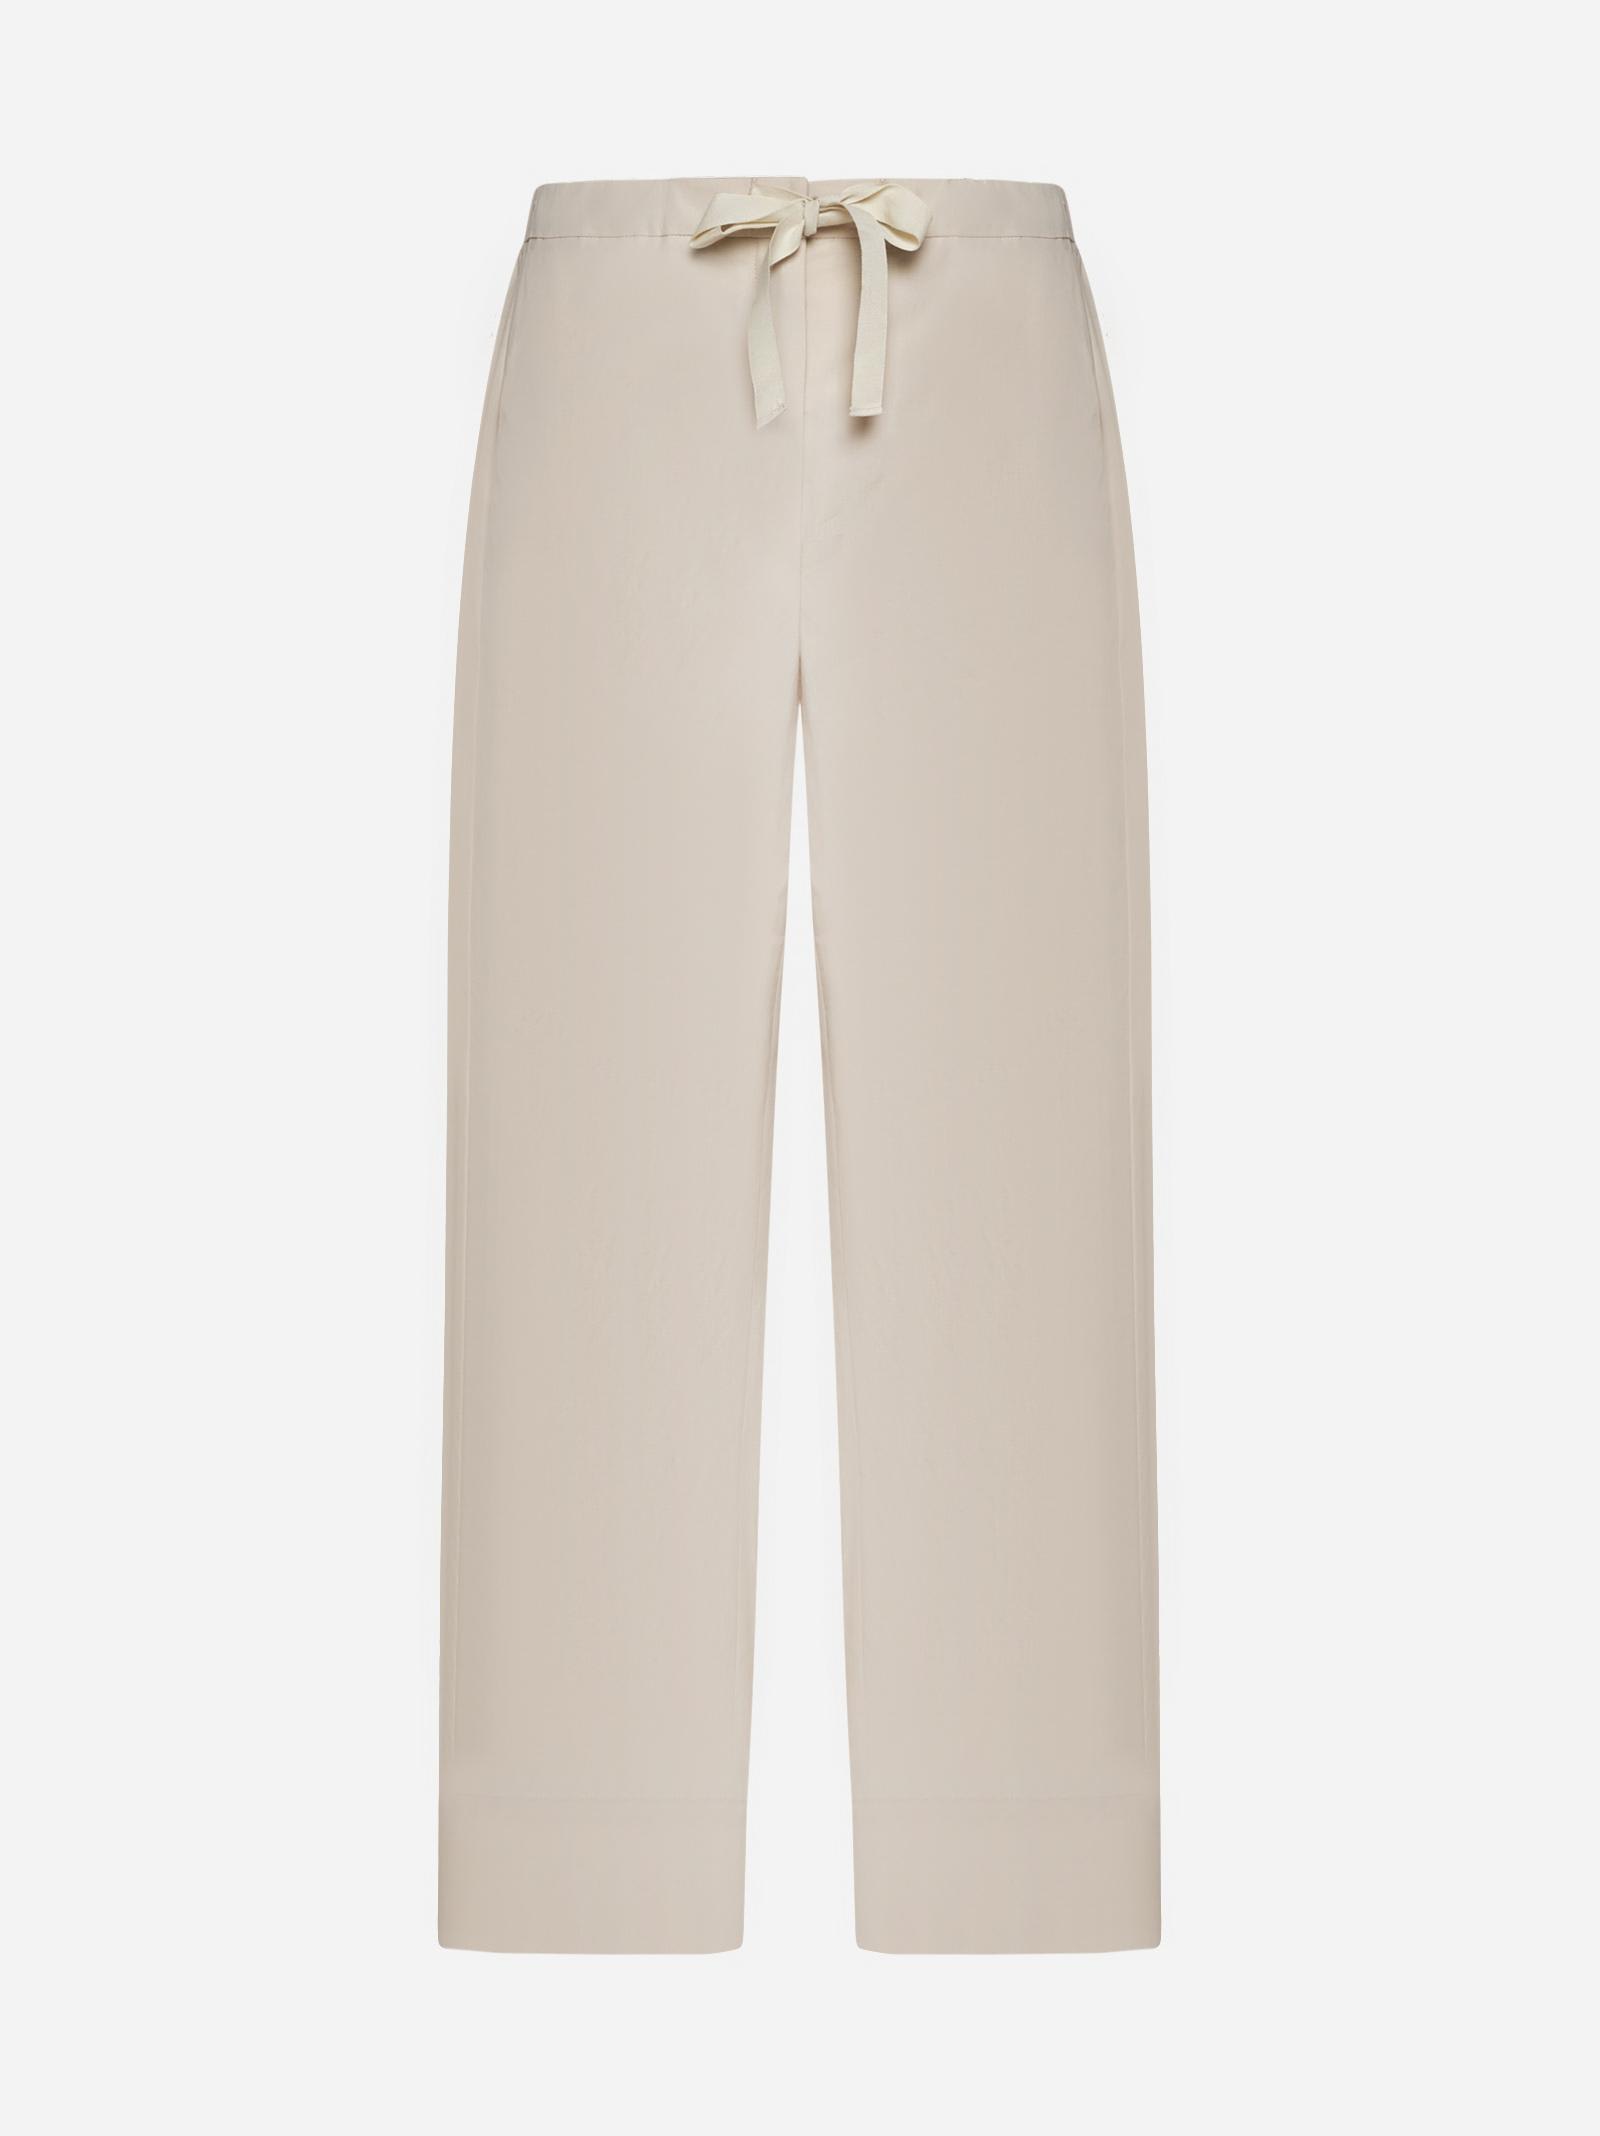 'S Max Mara Argento Cotton Trousers